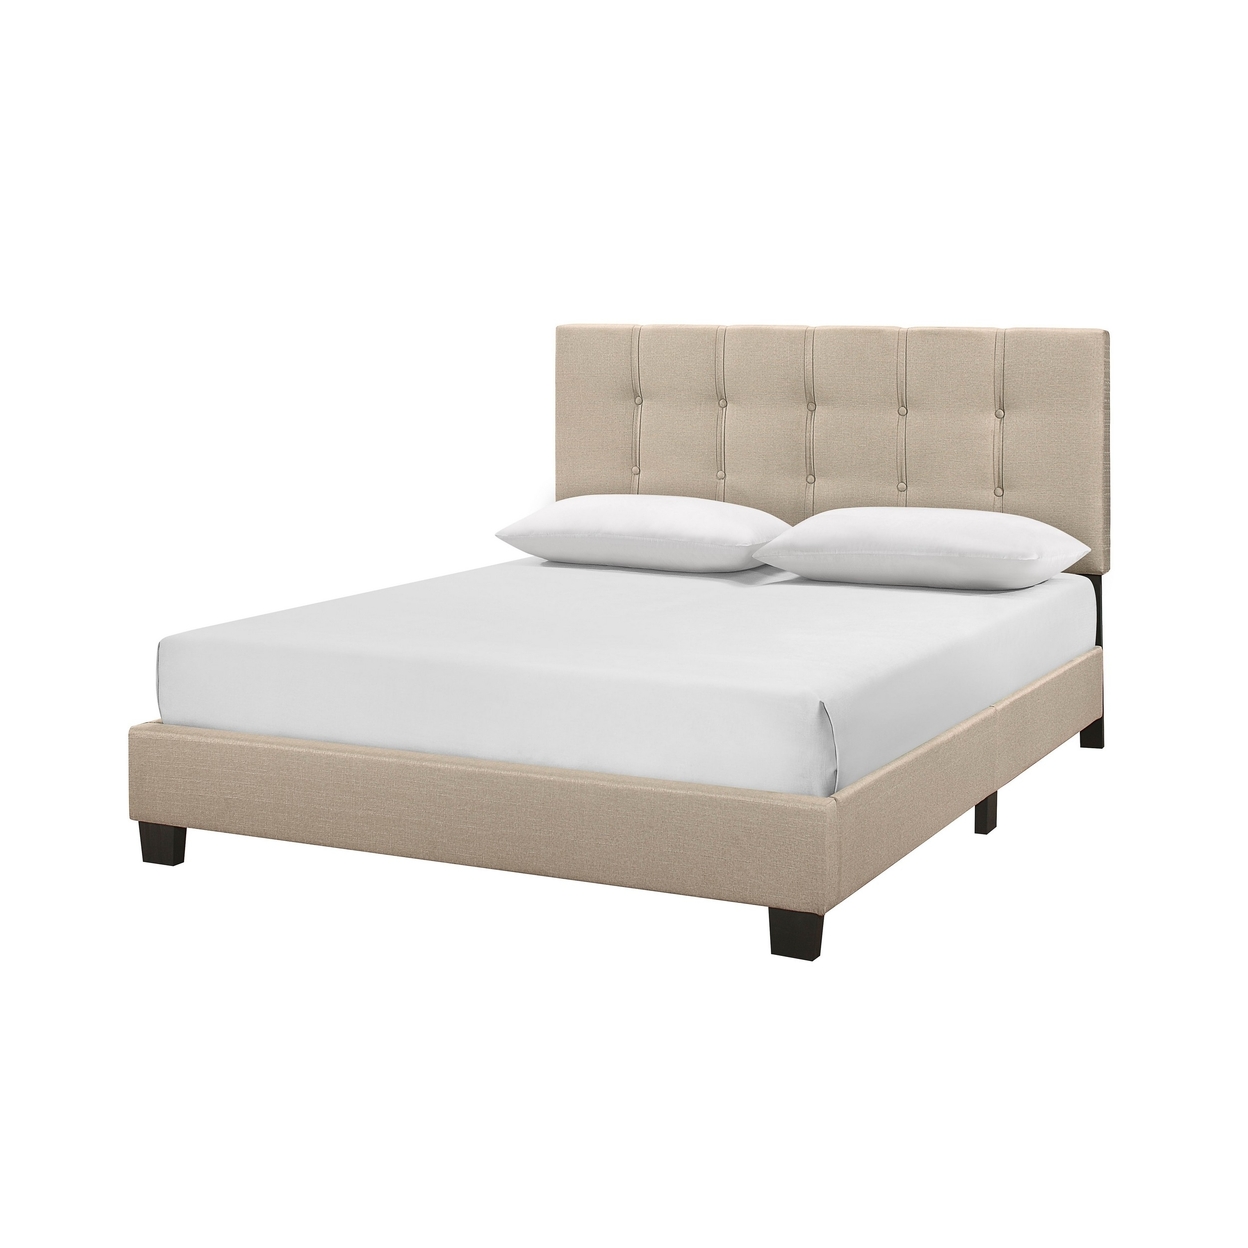 Kody Full Bed, Fabric Upholstered, Tufted Headboard, Low Profile, Beige- Saltoro Sherpi